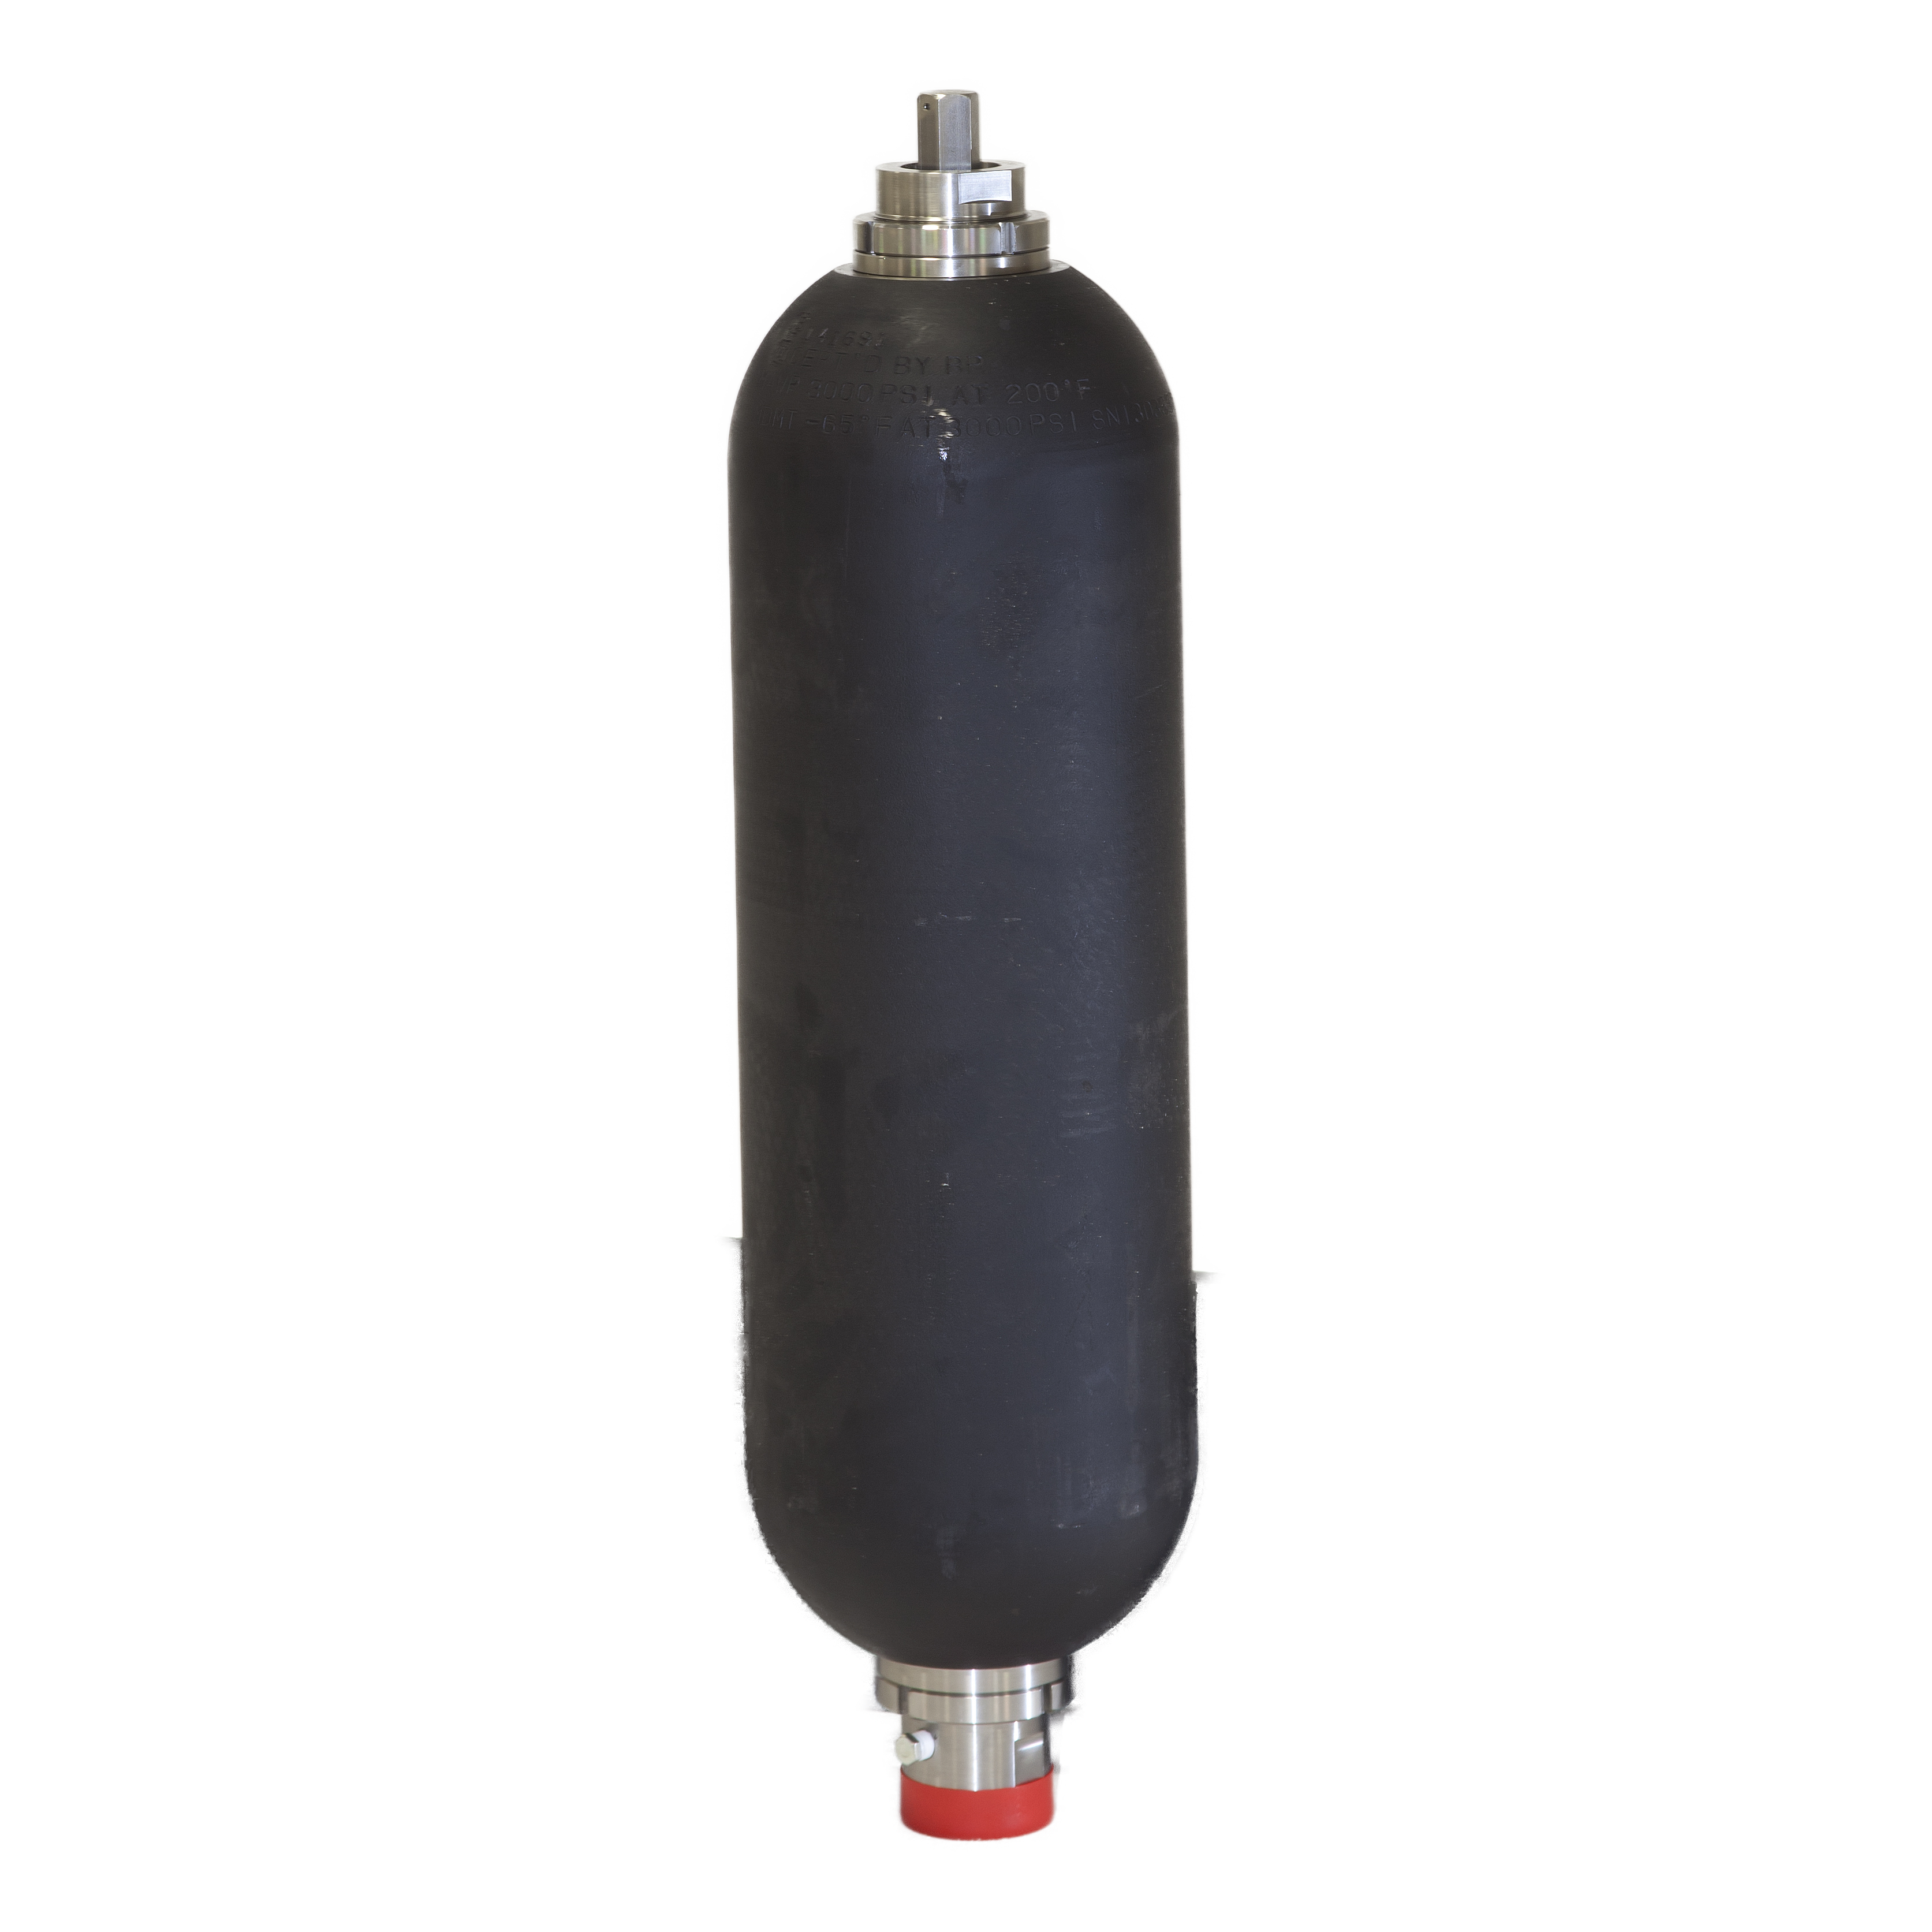 GB37-05-NE-N-O-1-A : SFP Gas Bottles 5000psi, 5000psi, 10 Gallon (37 Liter), 1.25" NPT